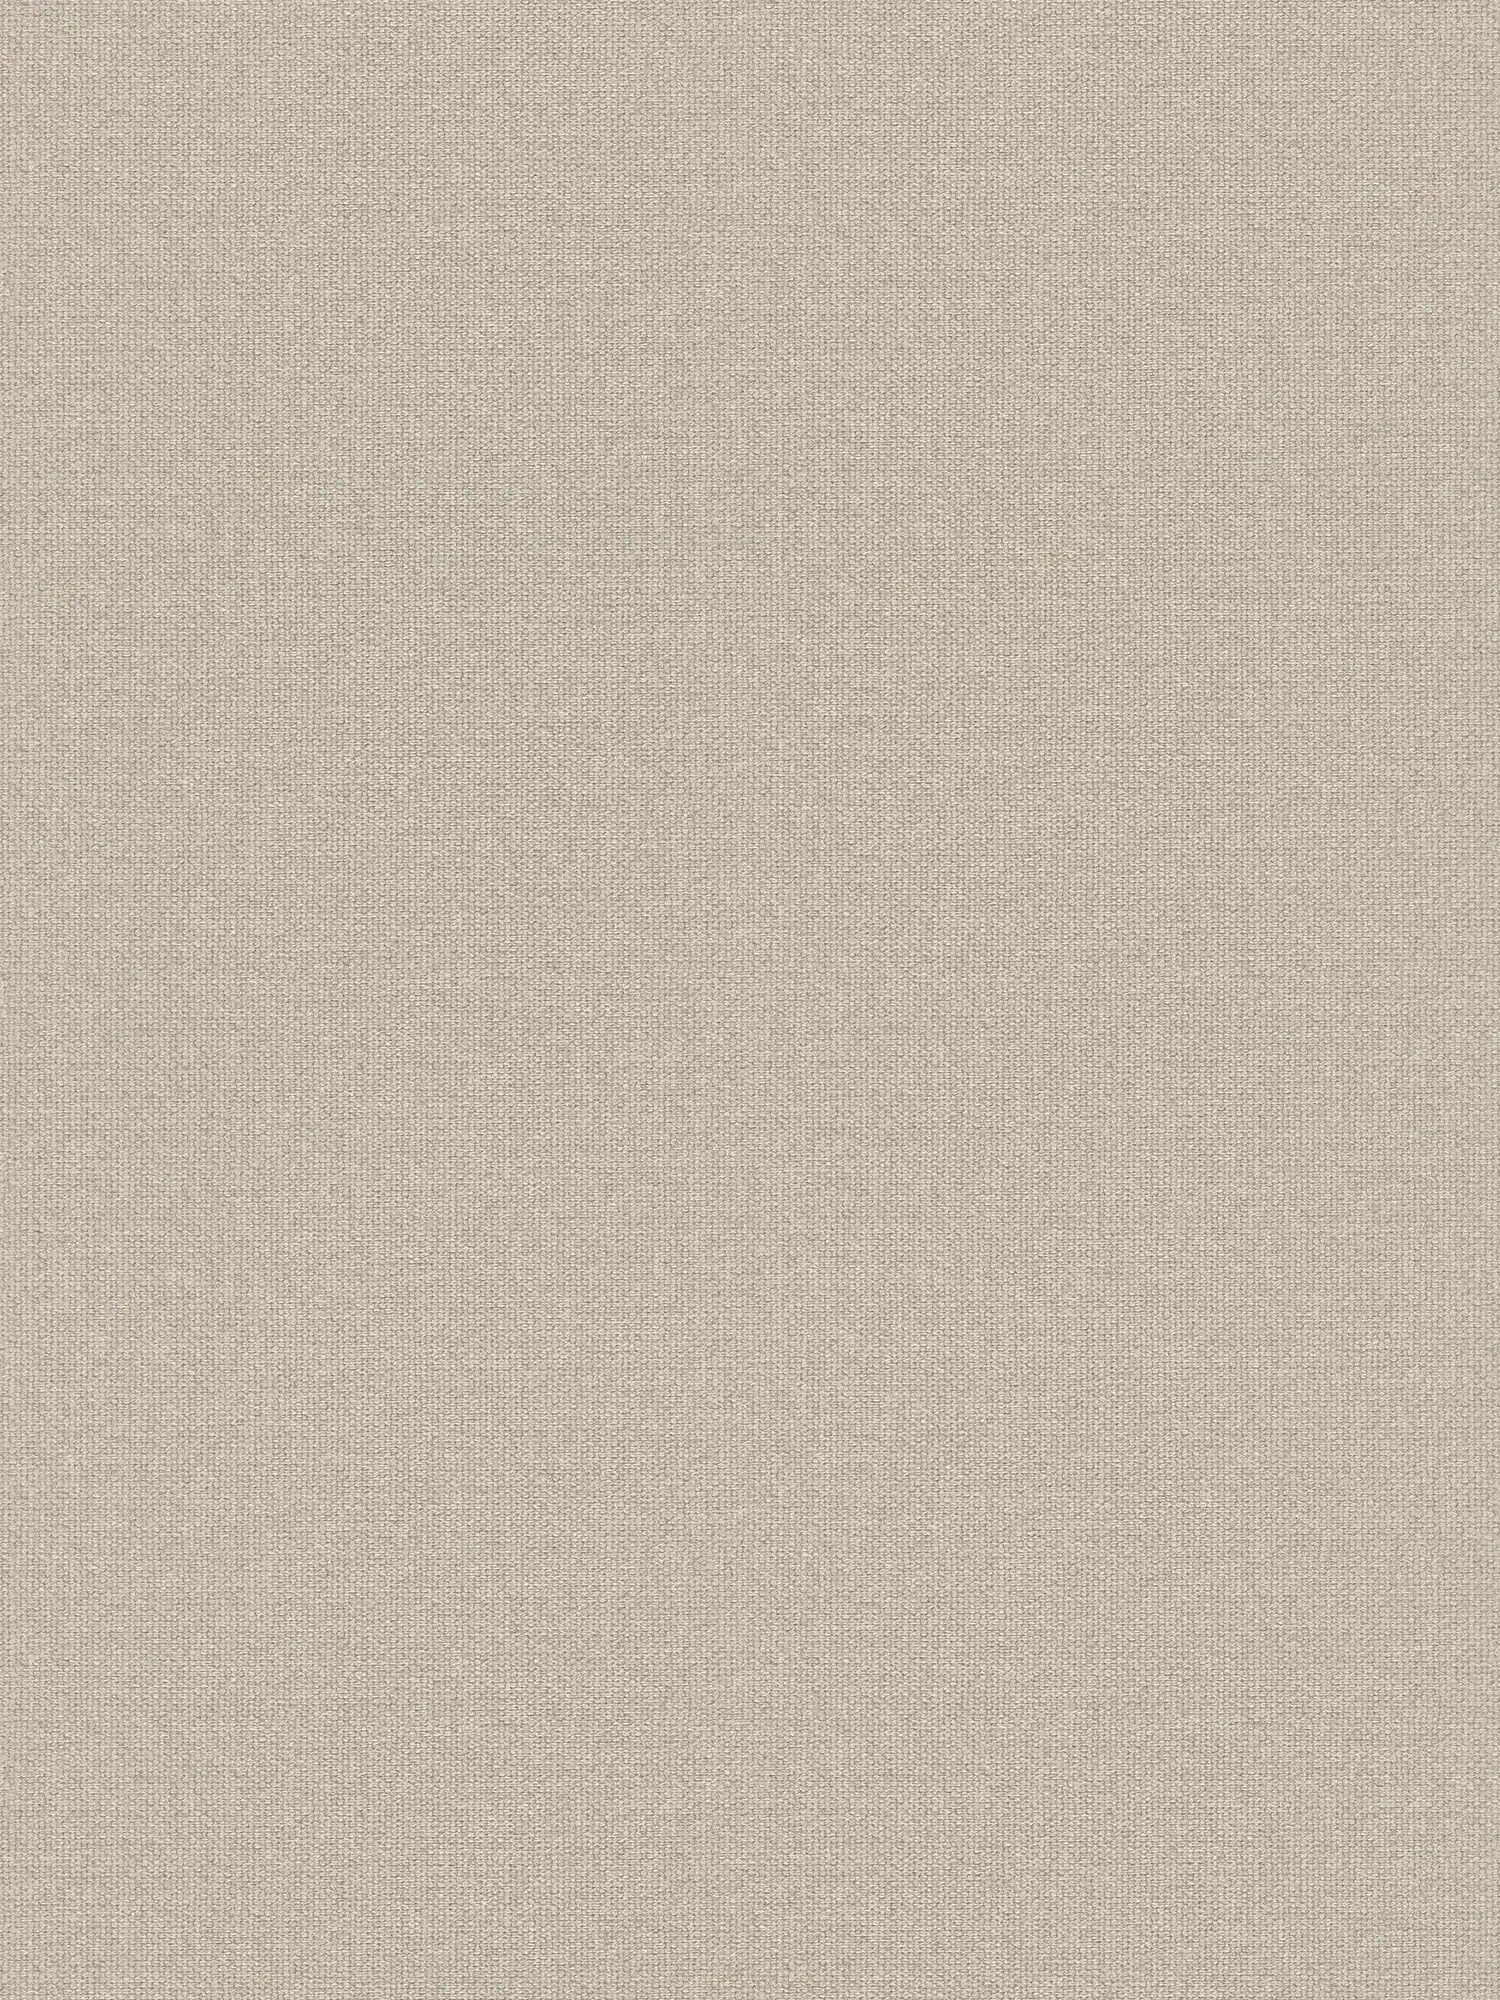 Linen look wallpaper with textured surface, plain - beige, grey
